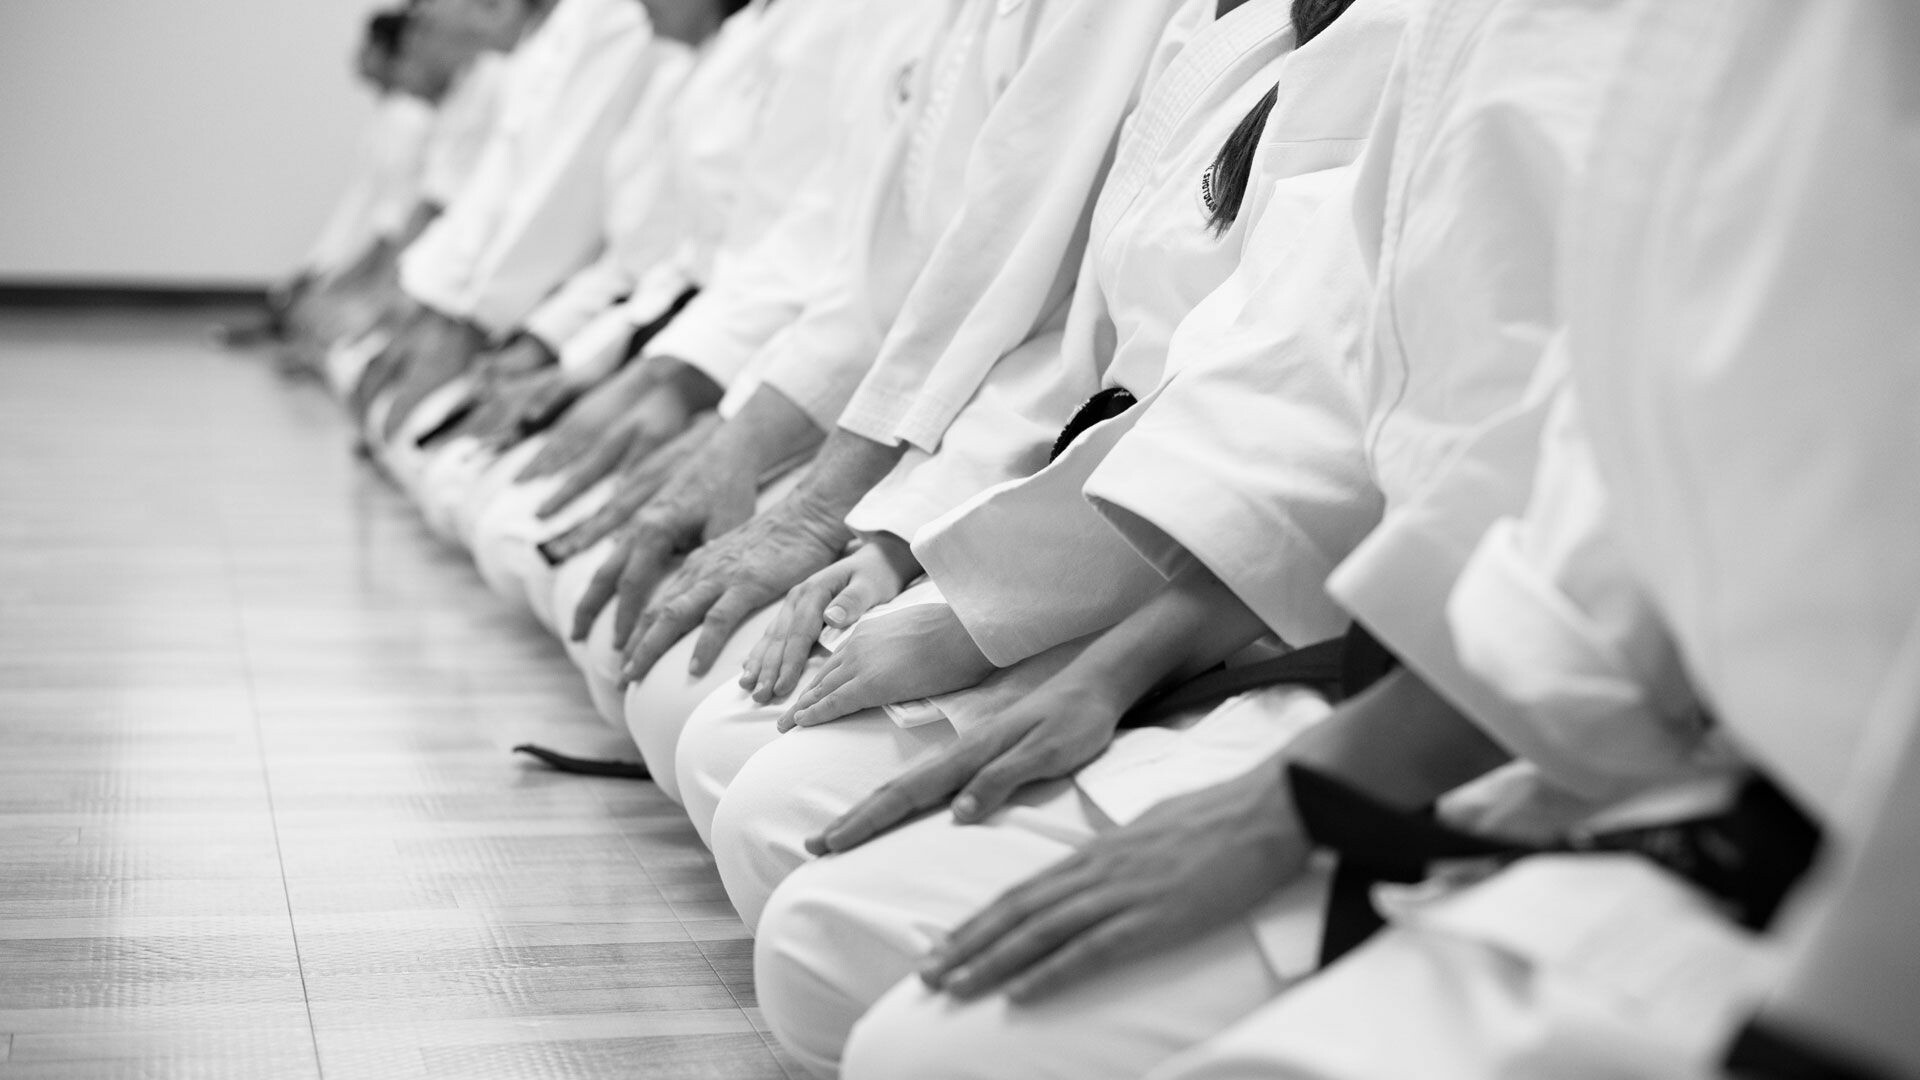 Karate: Monochrome group of karateka, Japanese martial arts training. 1920x1080 Full HD Wallpaper.